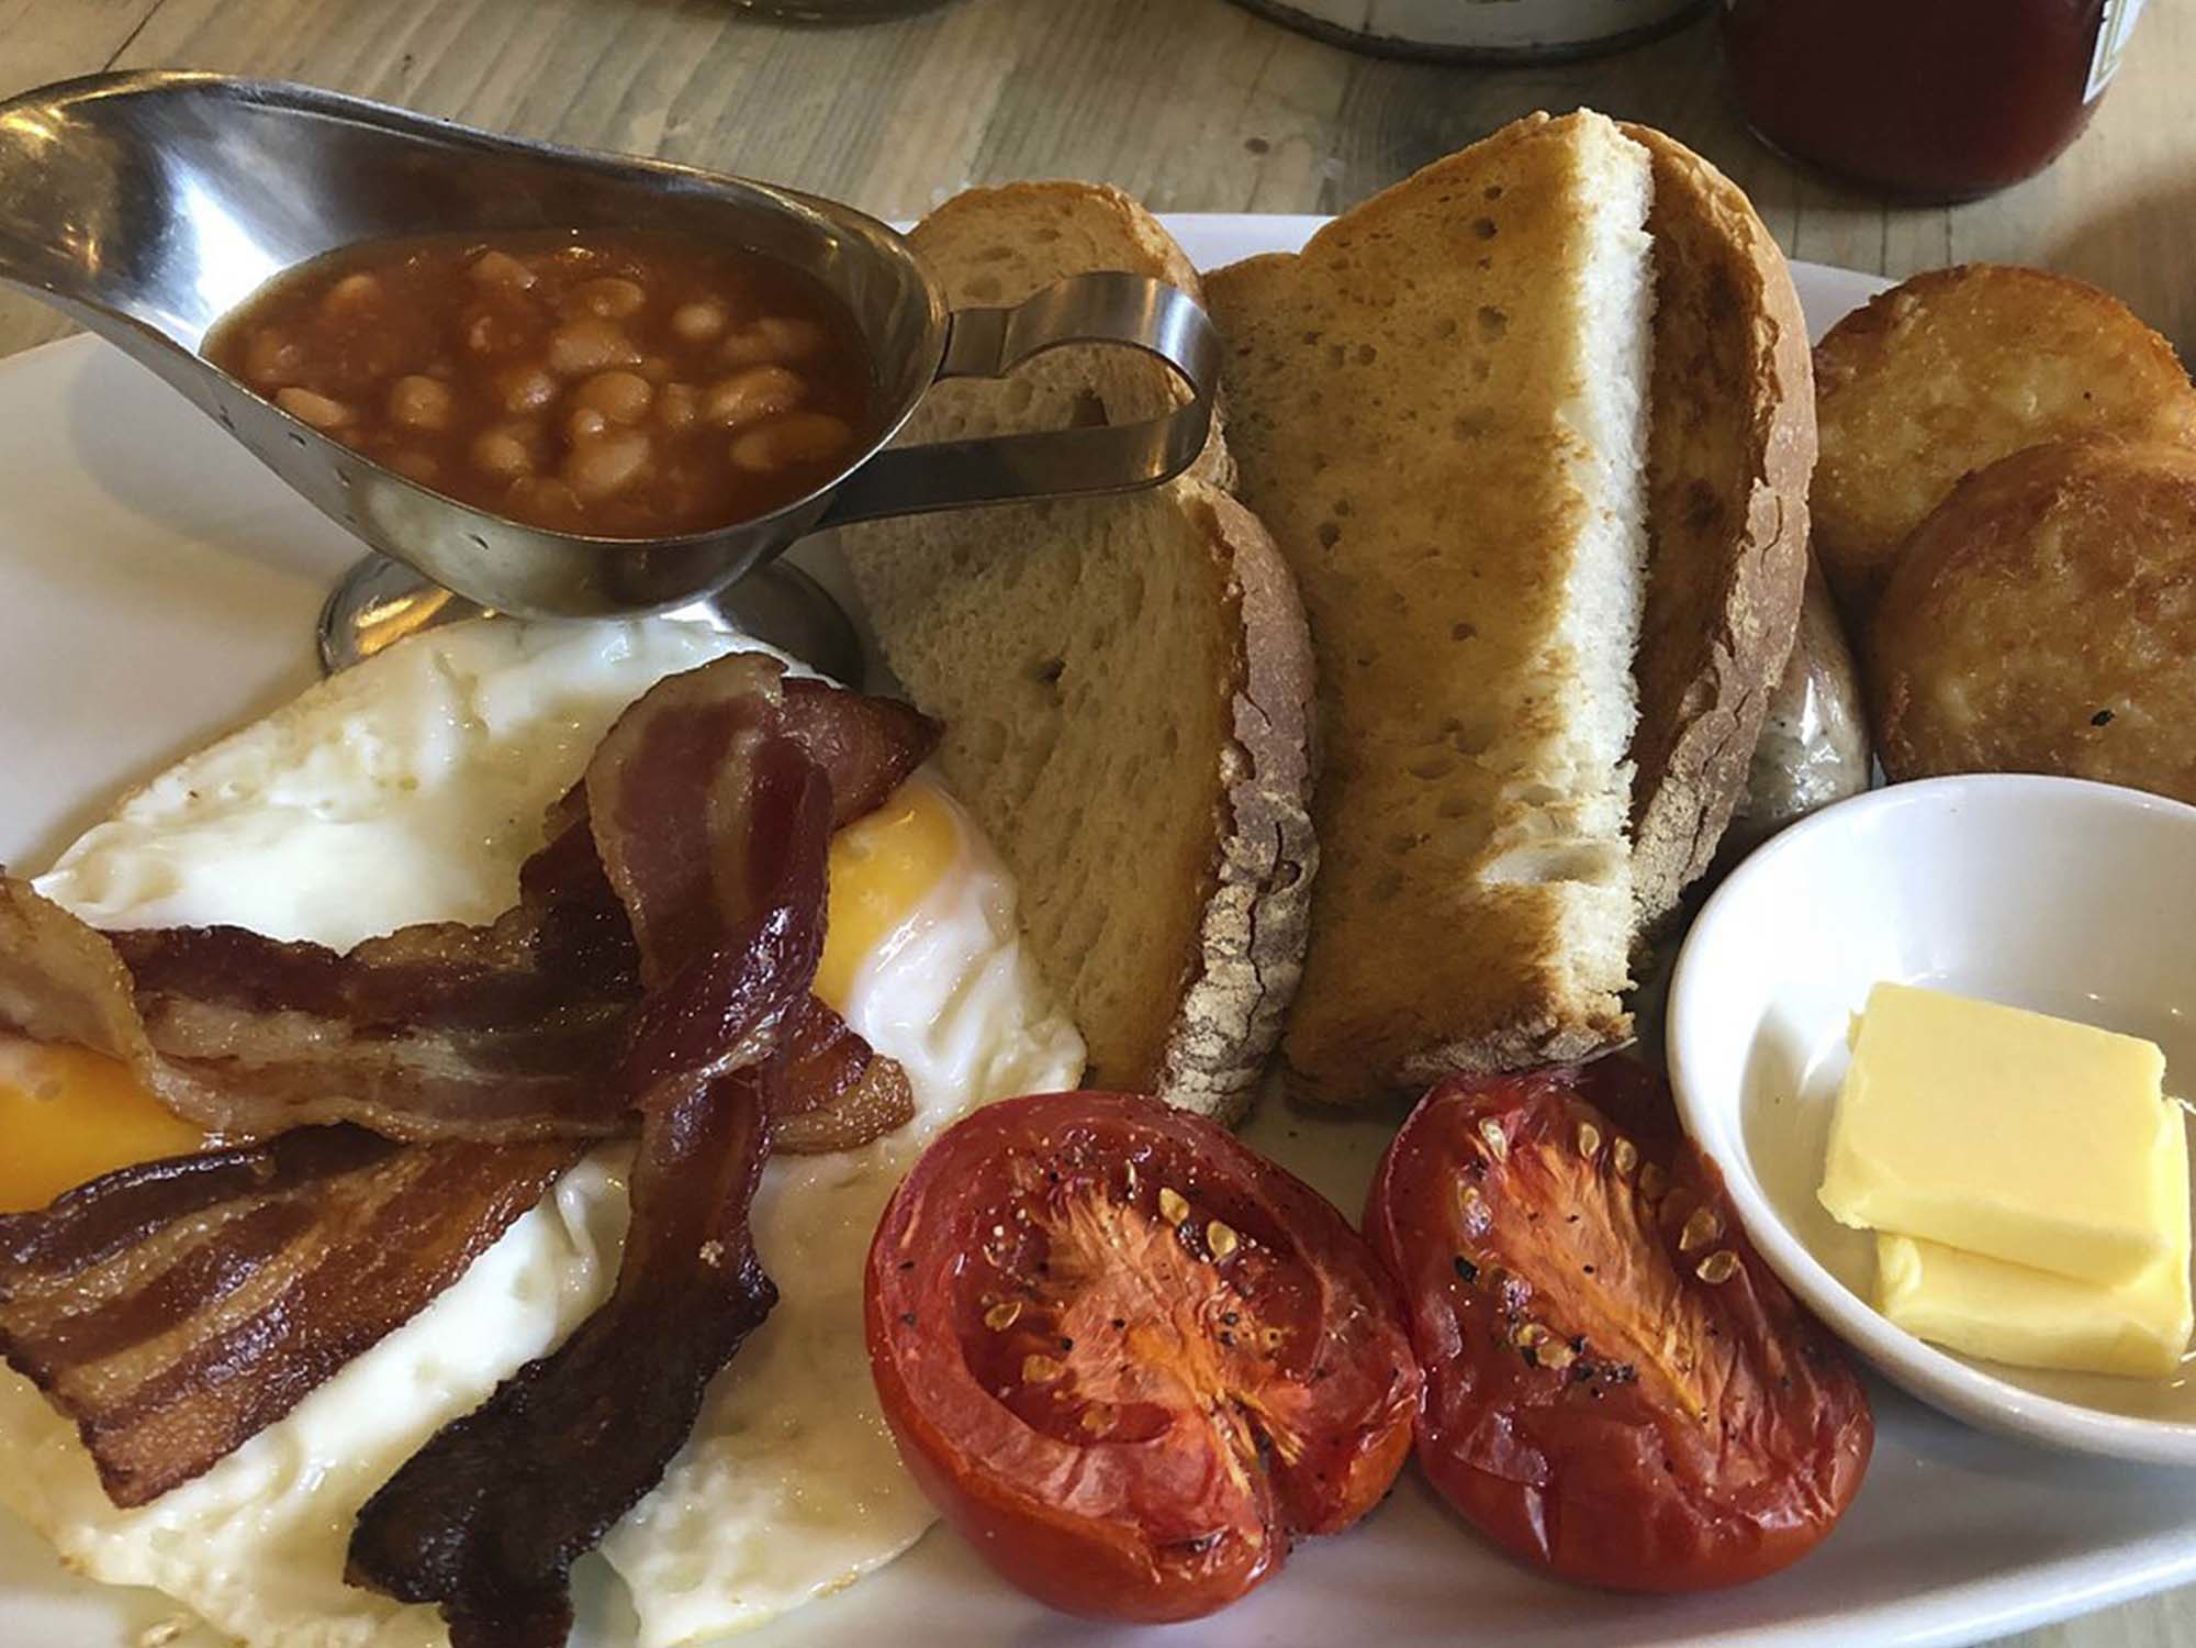 Best Breakfast in Manchester - Bill's